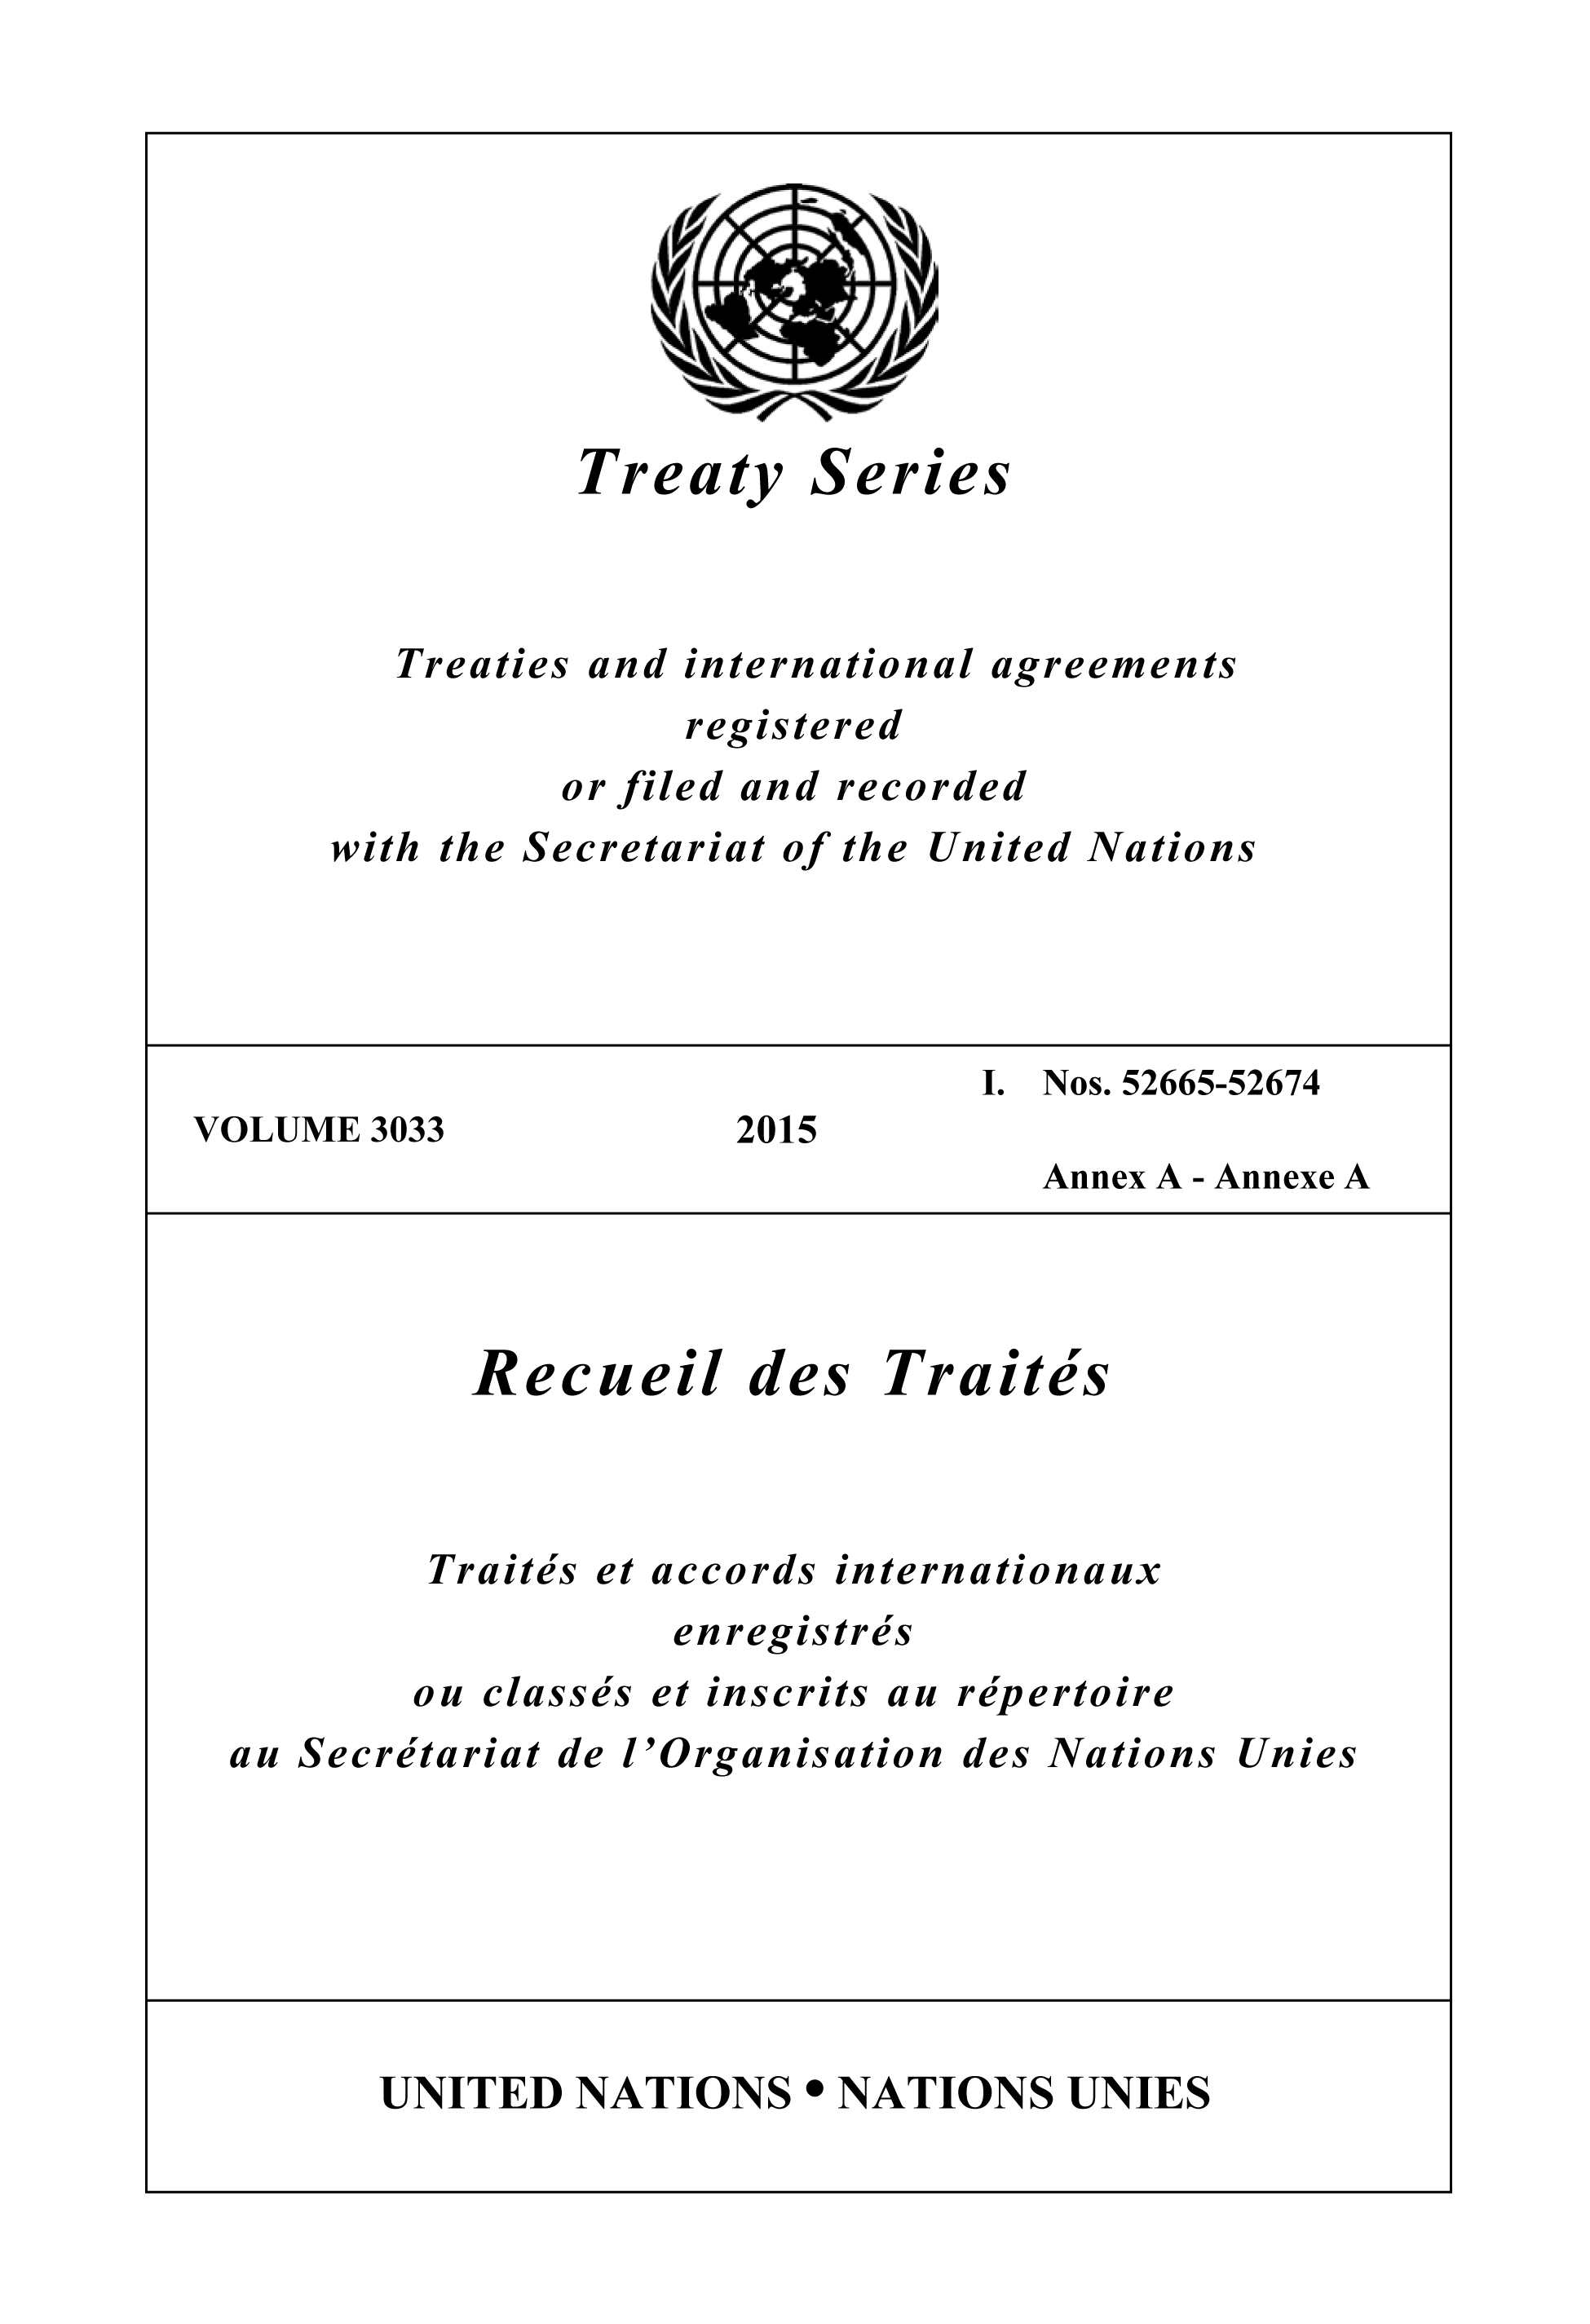 image of Treaty Series 3033